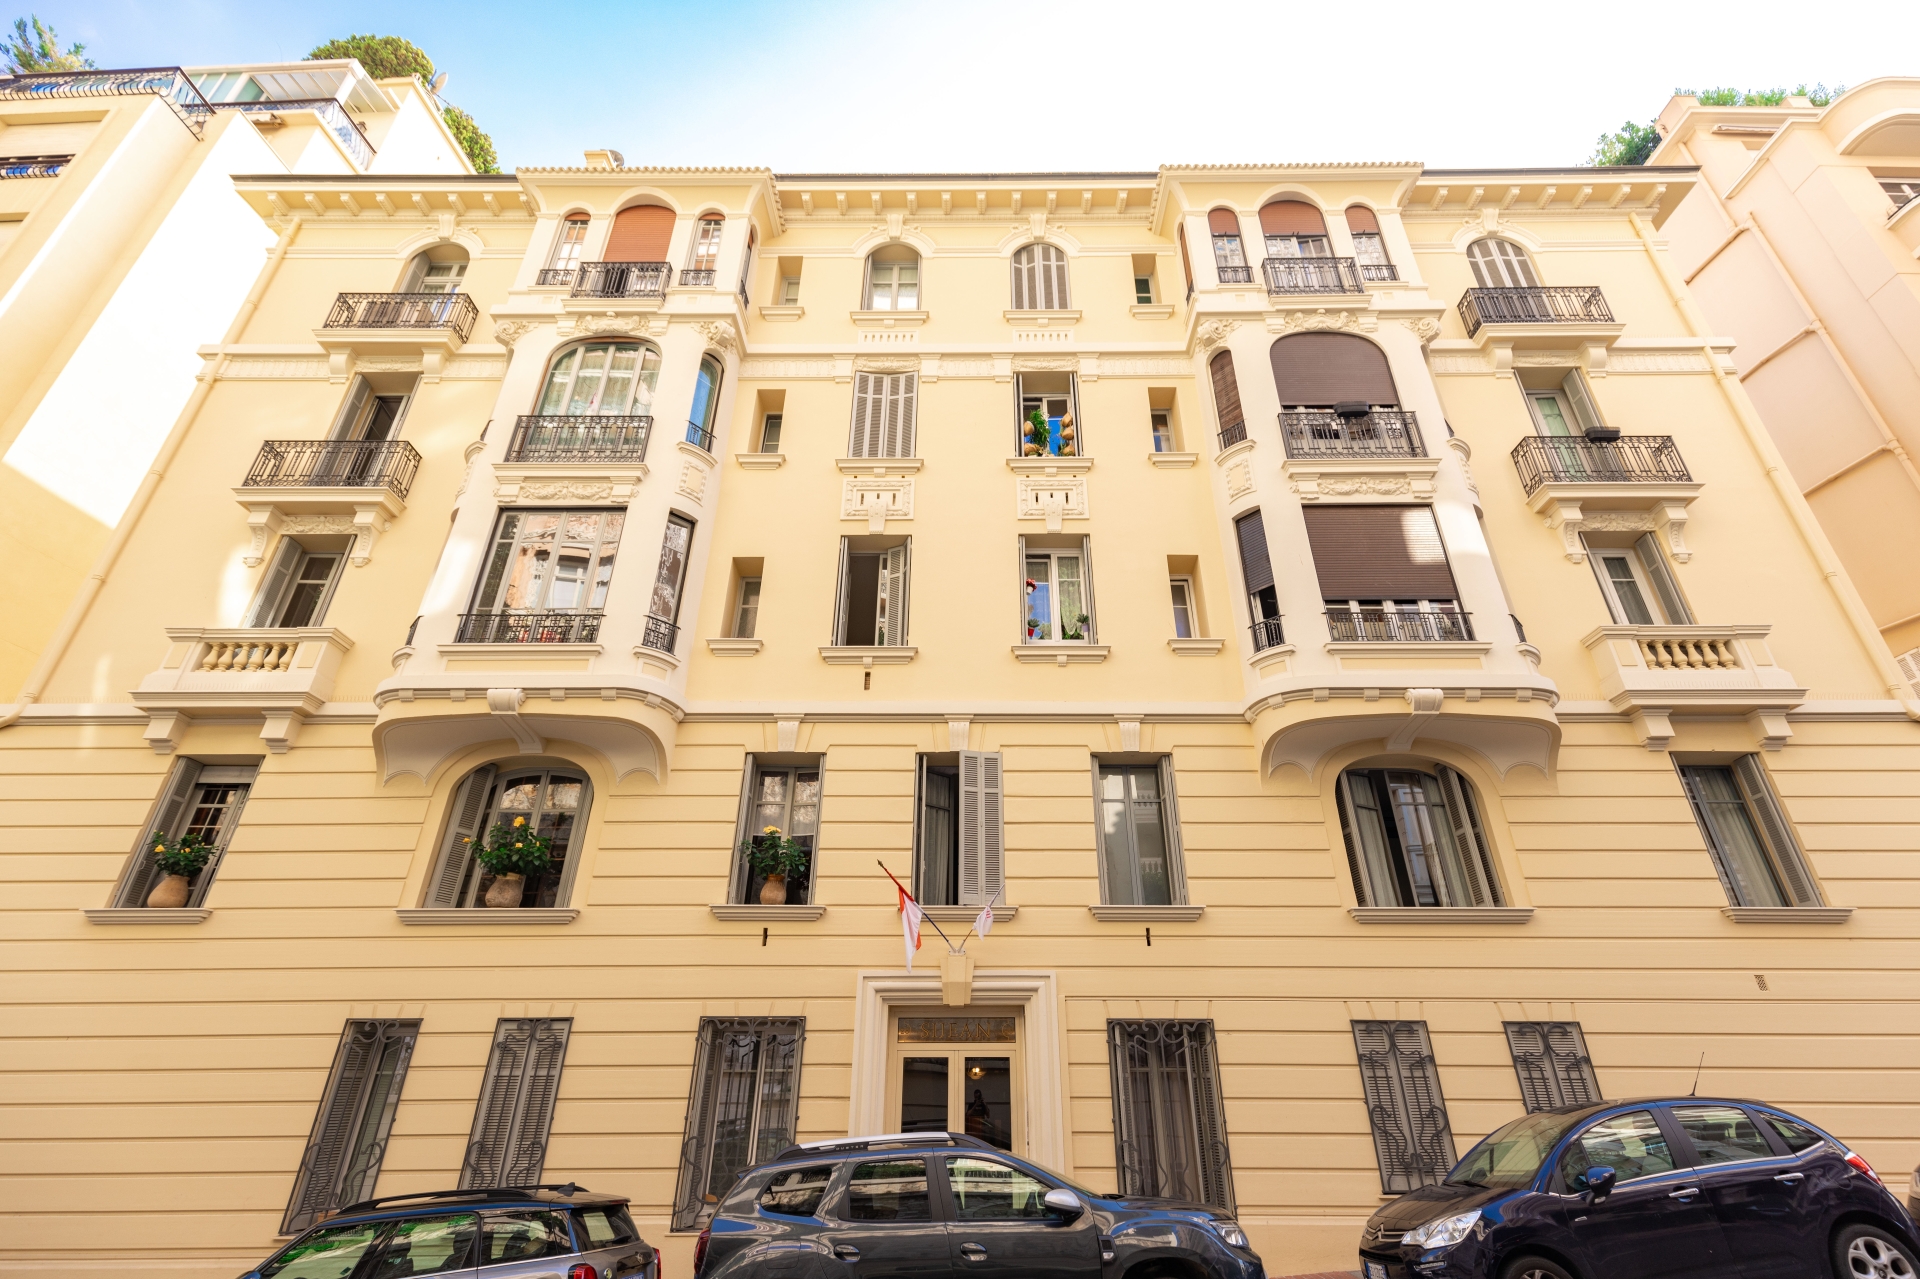 Dotta Appartement de 4 pieces a vendre - PALAIS SIJEAN - Monte-Carlo - Monaco - imgjeremyjakubo074a3012